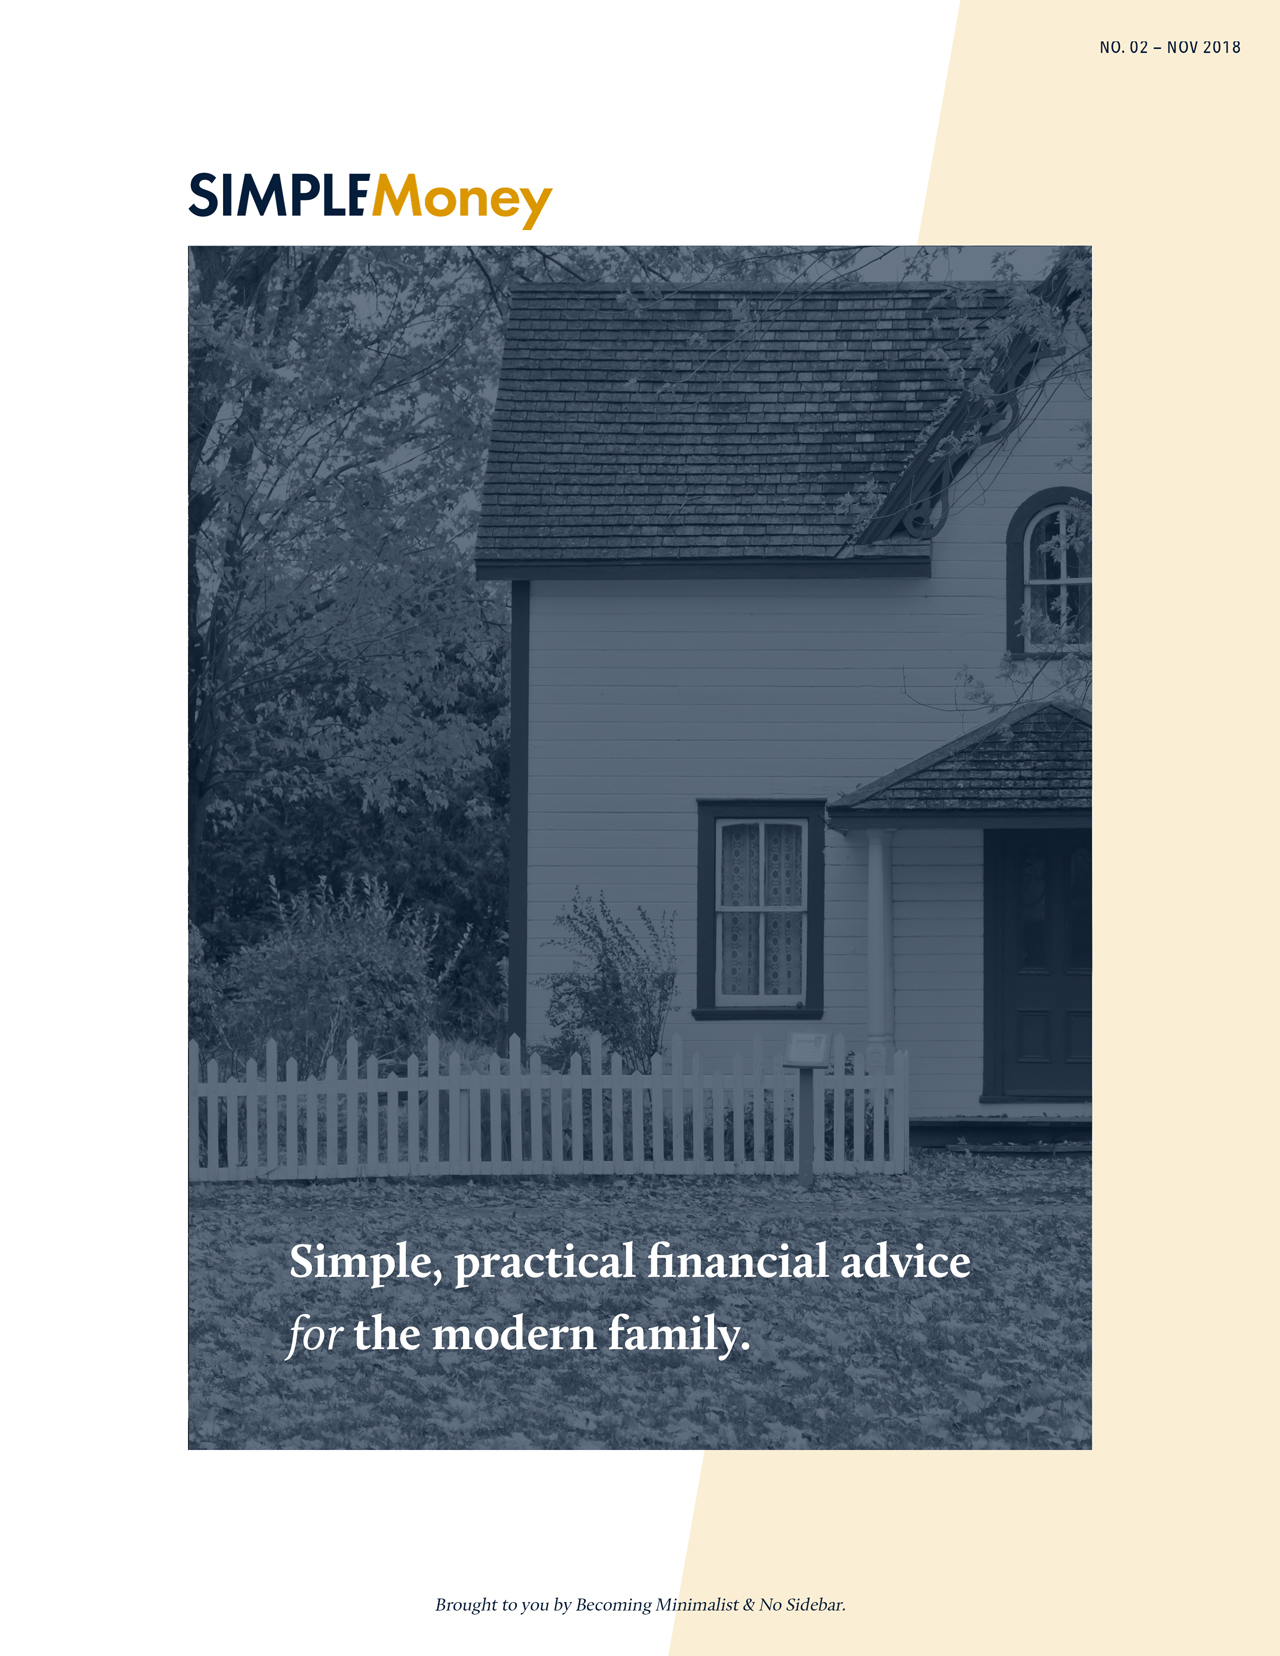 Simple Money Magazine Issue #02